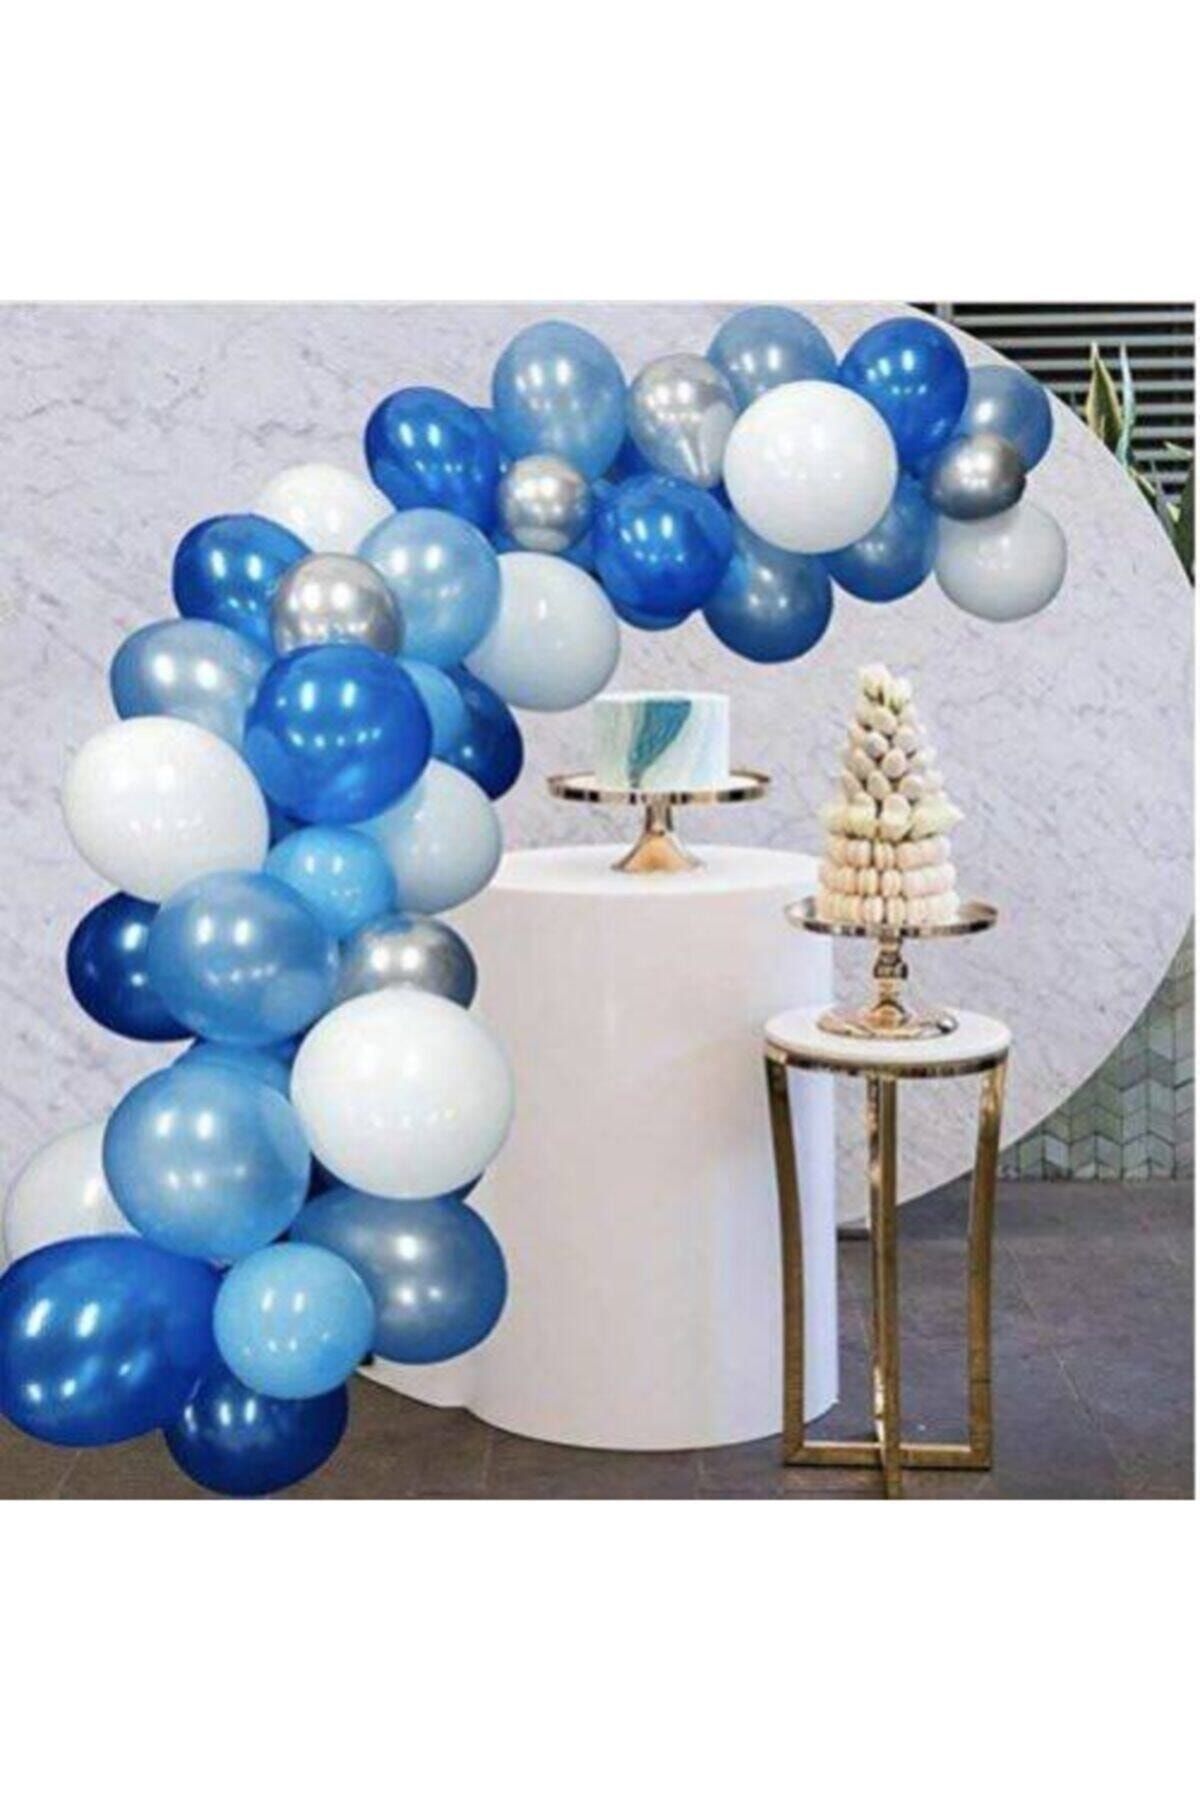 MERİ PARTİ Balon Parti 100 Adet Beyaz Mavi Gri Lacivert Metalik Balon Ve Balon Zinciri